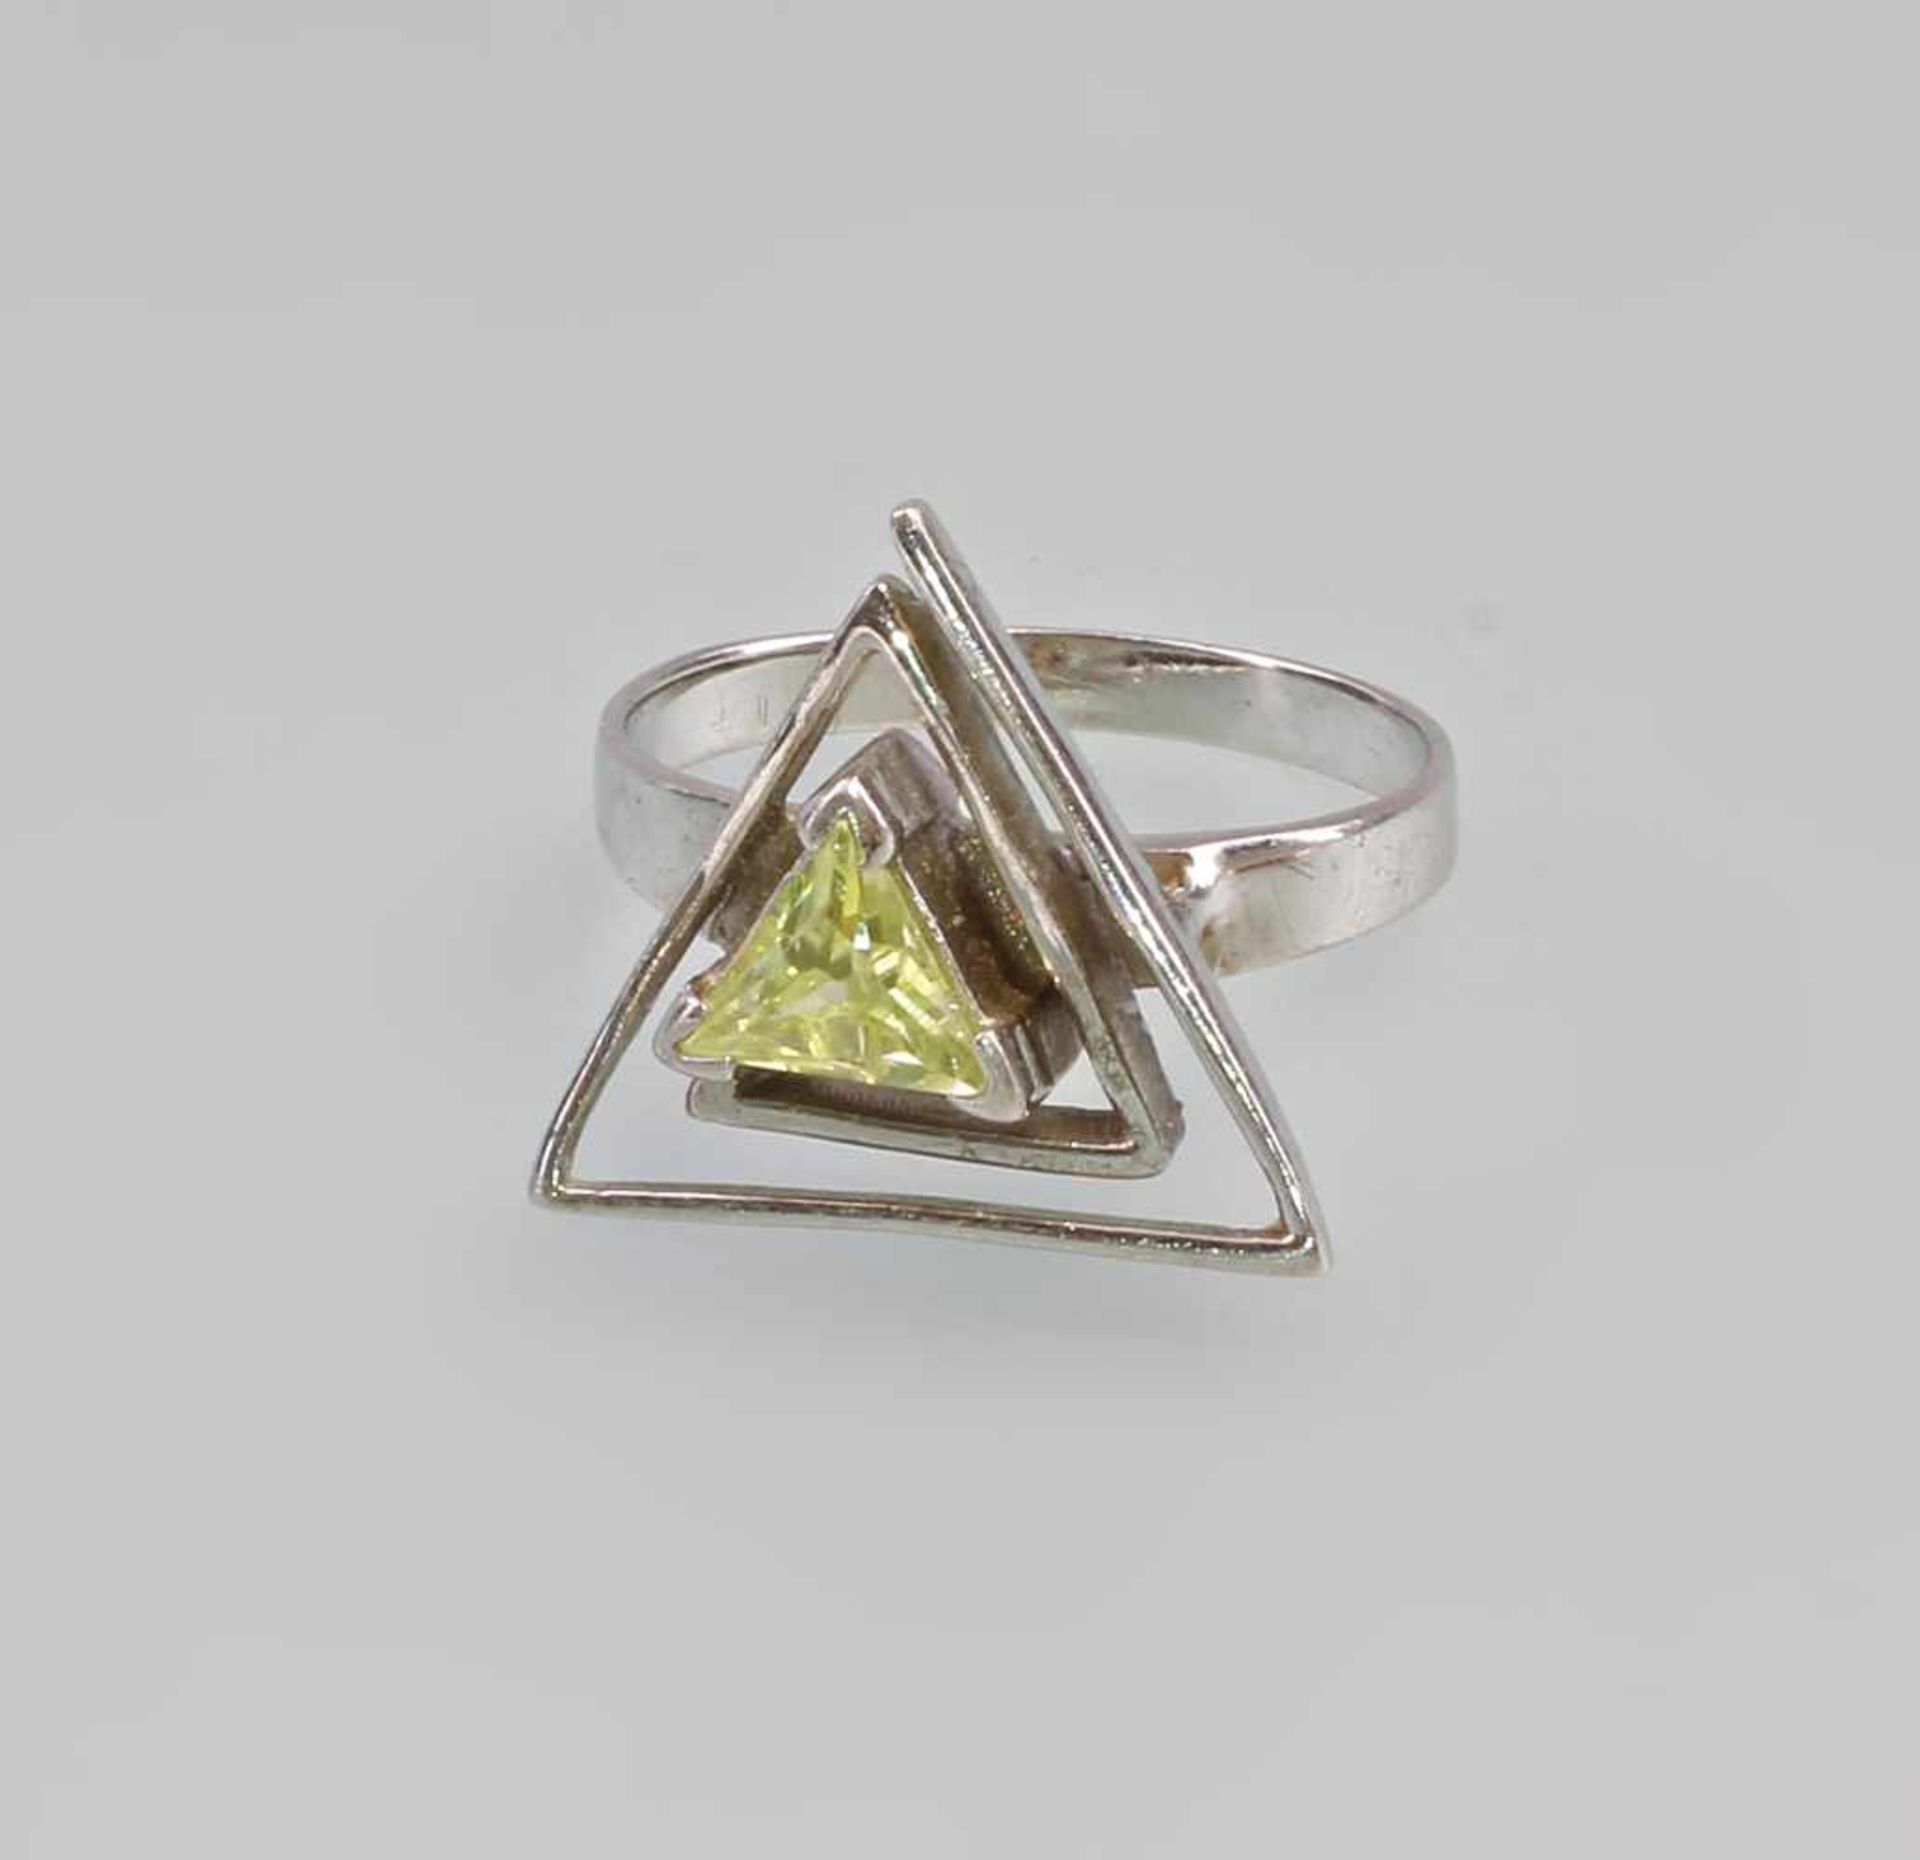 Lemonquarz - Ring. 925er Silber, 3,4 g, im dreieckigem Ringkopf aus spiralförmigem Steg